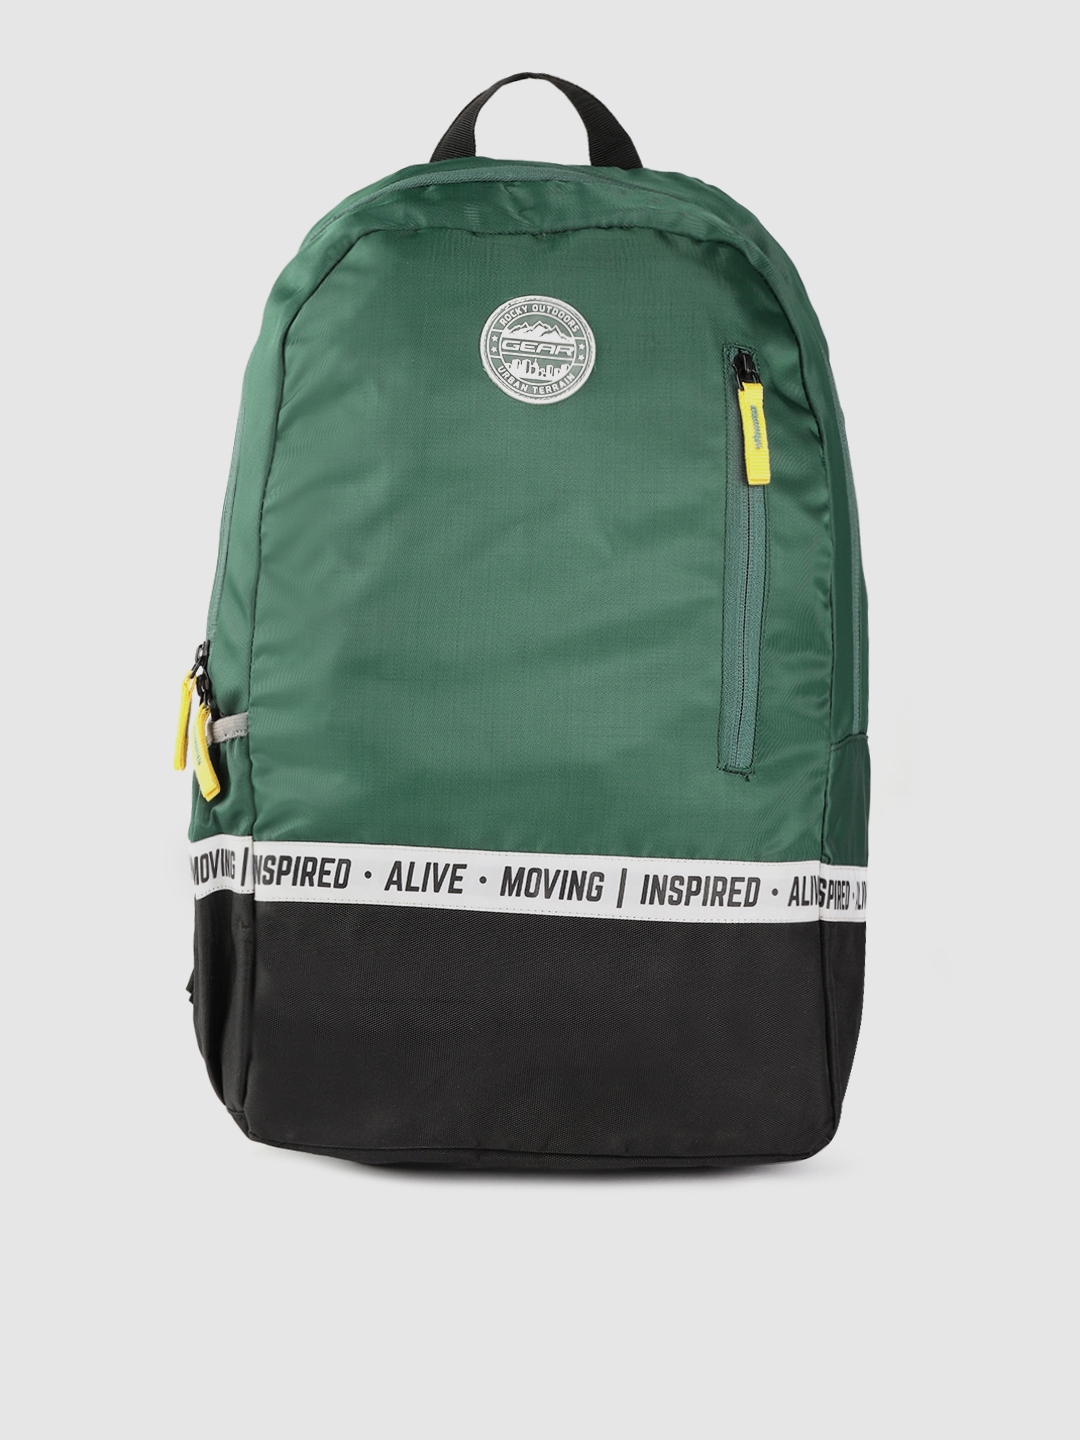 Gear Unisex Green   Black Colourblocked 18 Inch Laptop Backpack